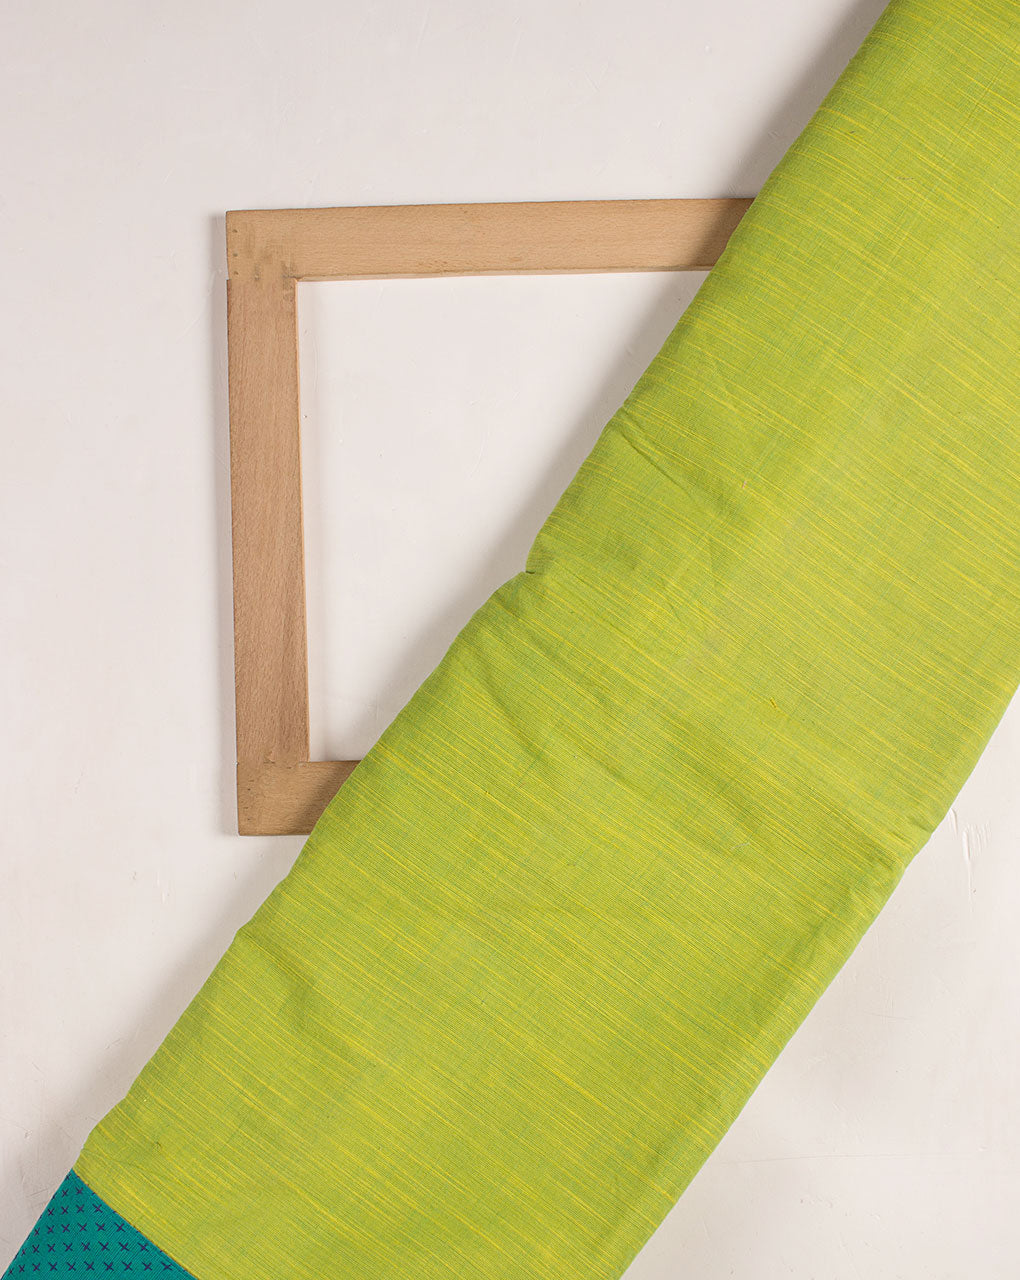 Green Plain Woven Loom Textured Cotton Fabric - Fabriclore.com